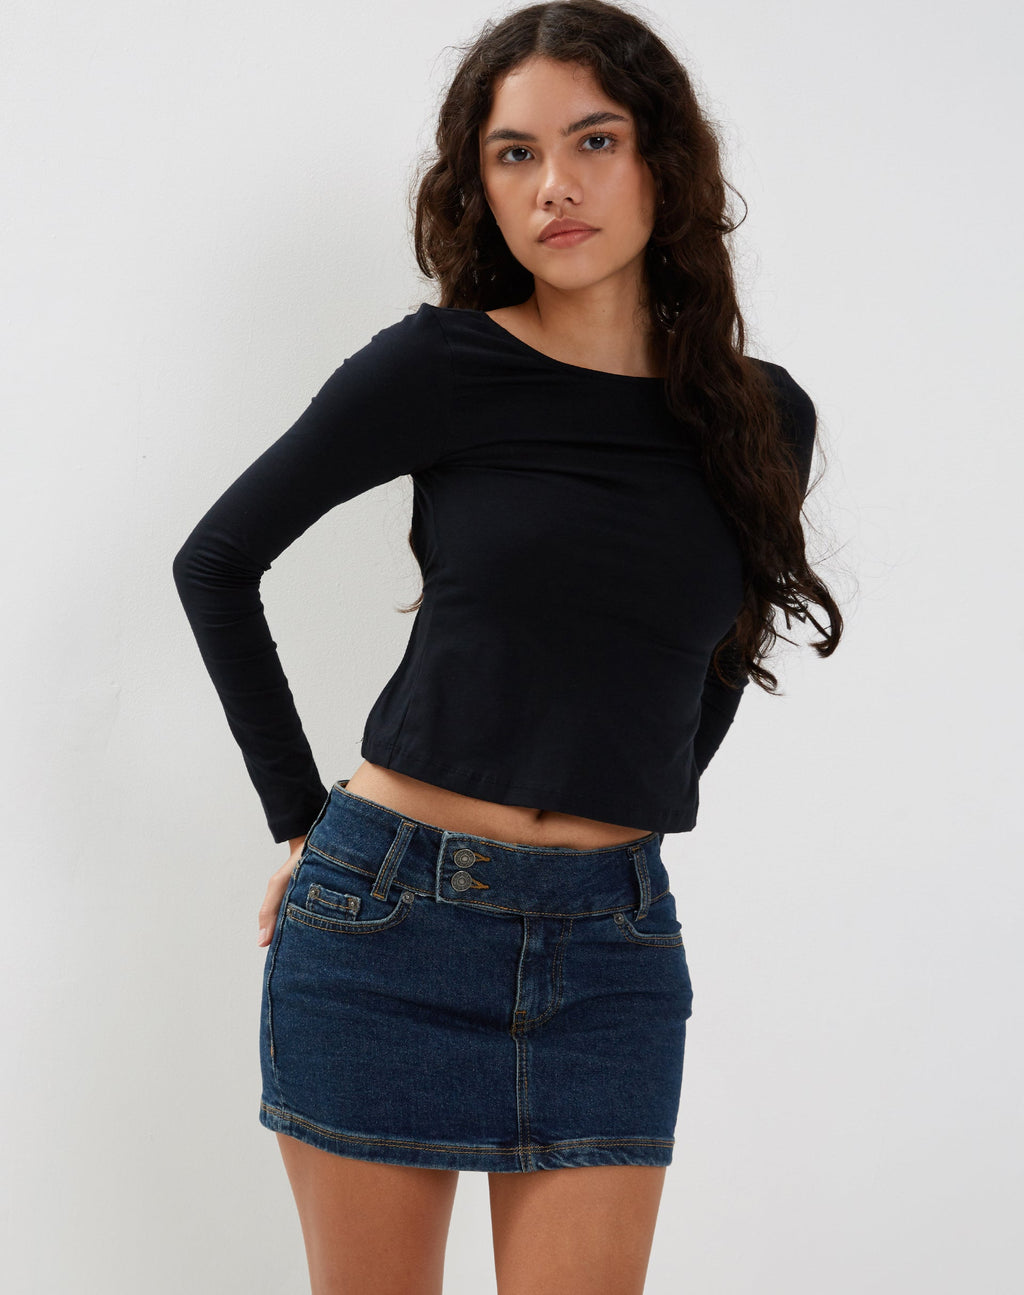 A-Line Skirt | – Denim motelrocks-com-us Indigo Mini